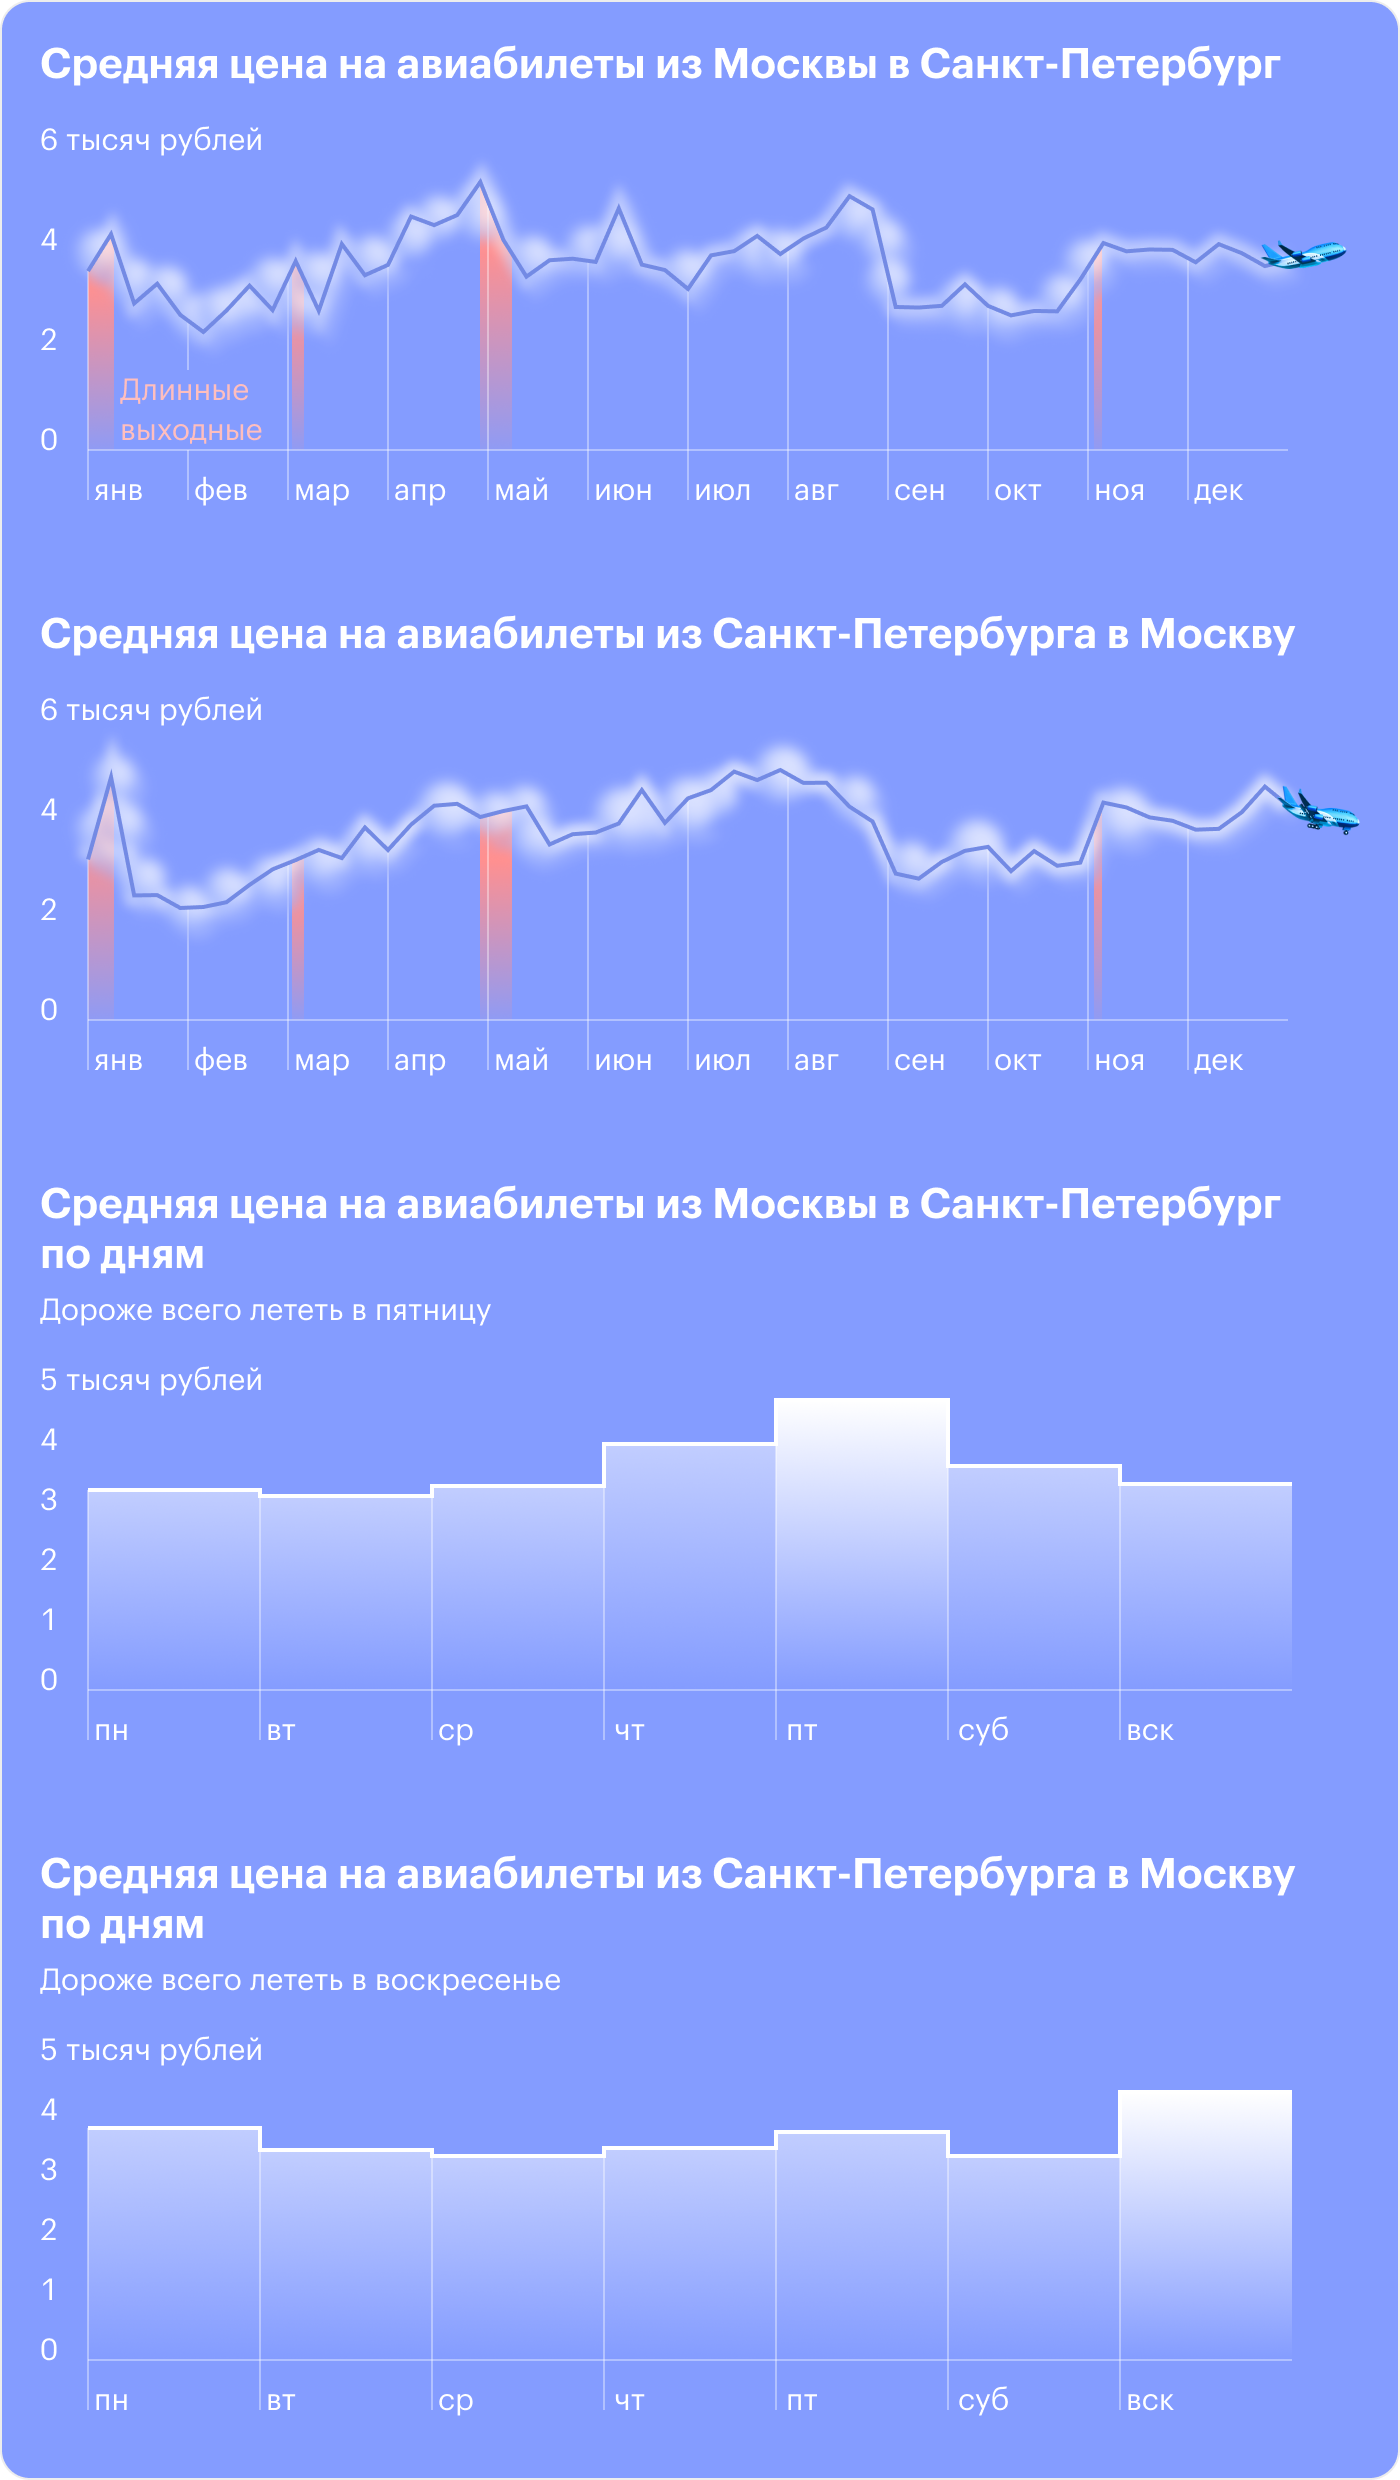 Динамика цен на авиабилеты по маршруту Москва — Санкт-Петербург и обратно. Источник: Tinkoff Data, расчеты Т⁠—⁠Ж